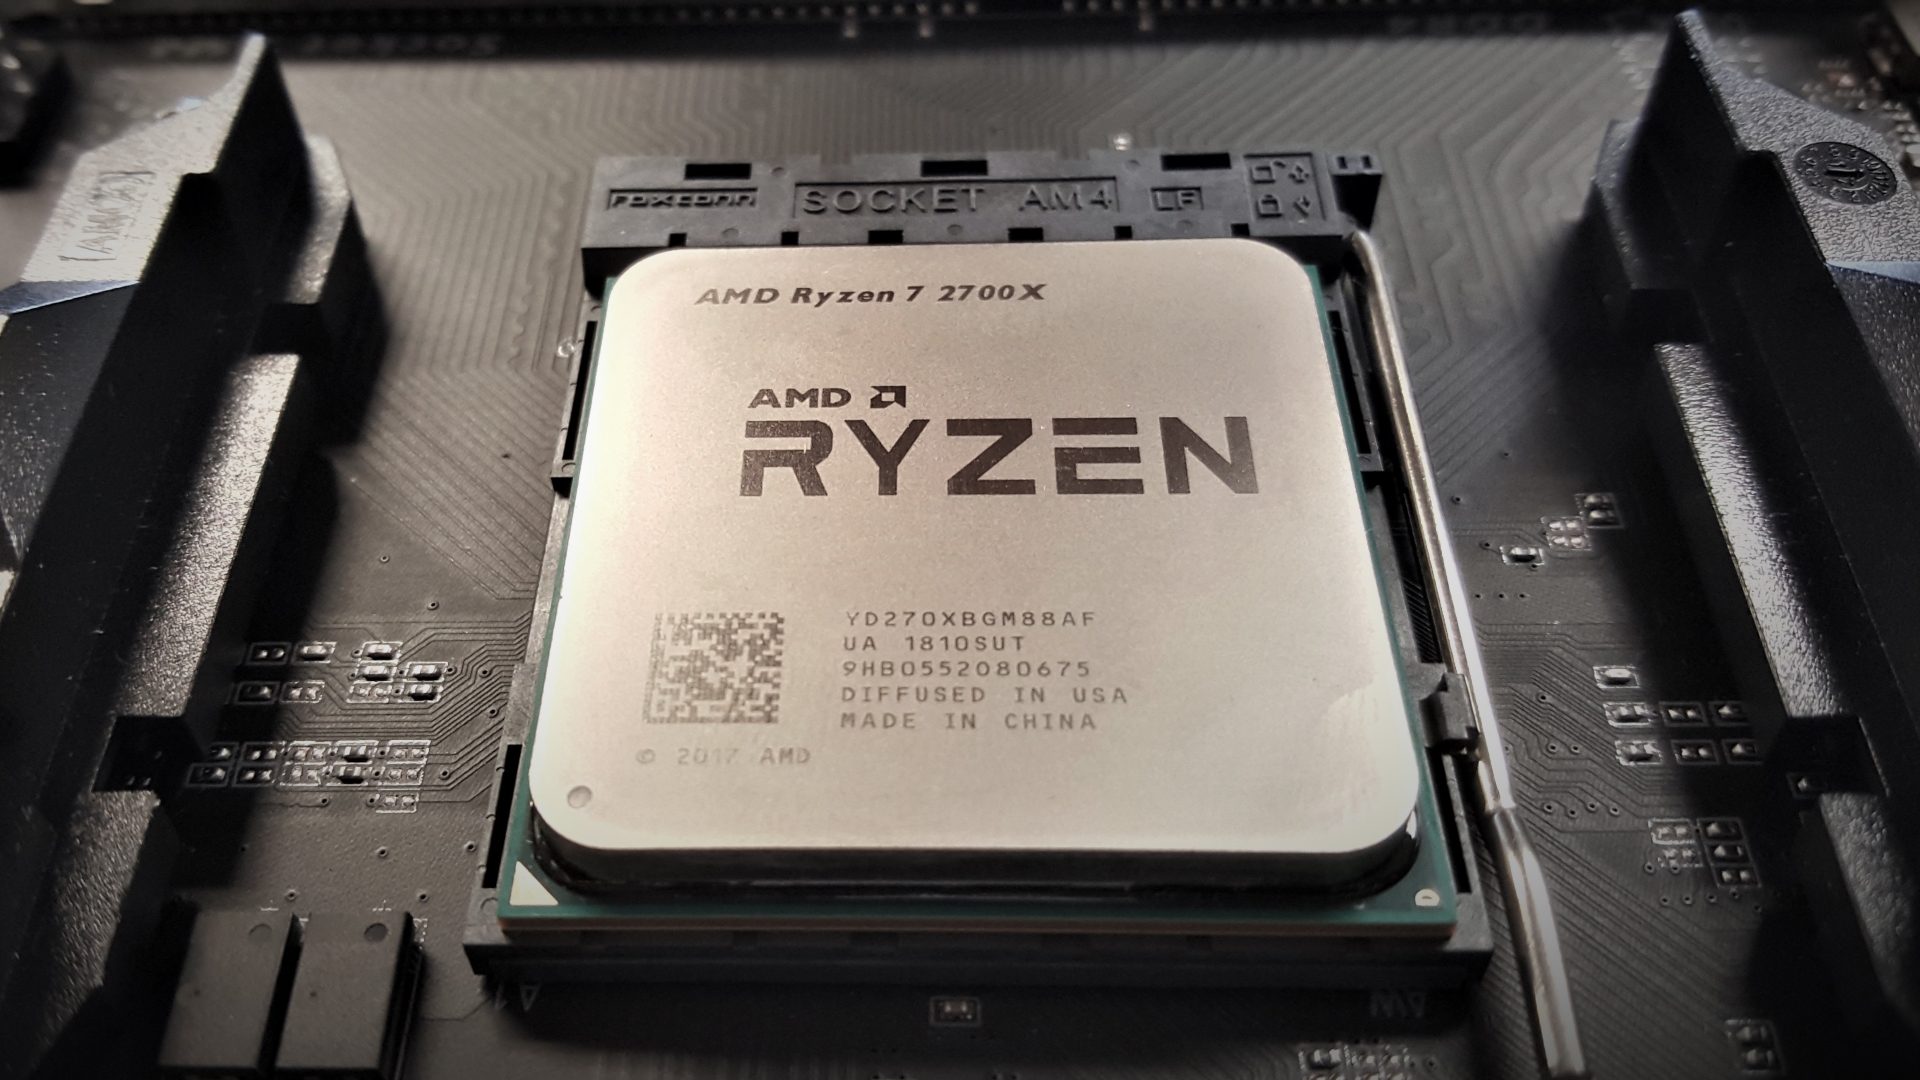 AMD Ryzen 7 2700X review: the Intel Coffee Lake CPU killer | PCGamesN